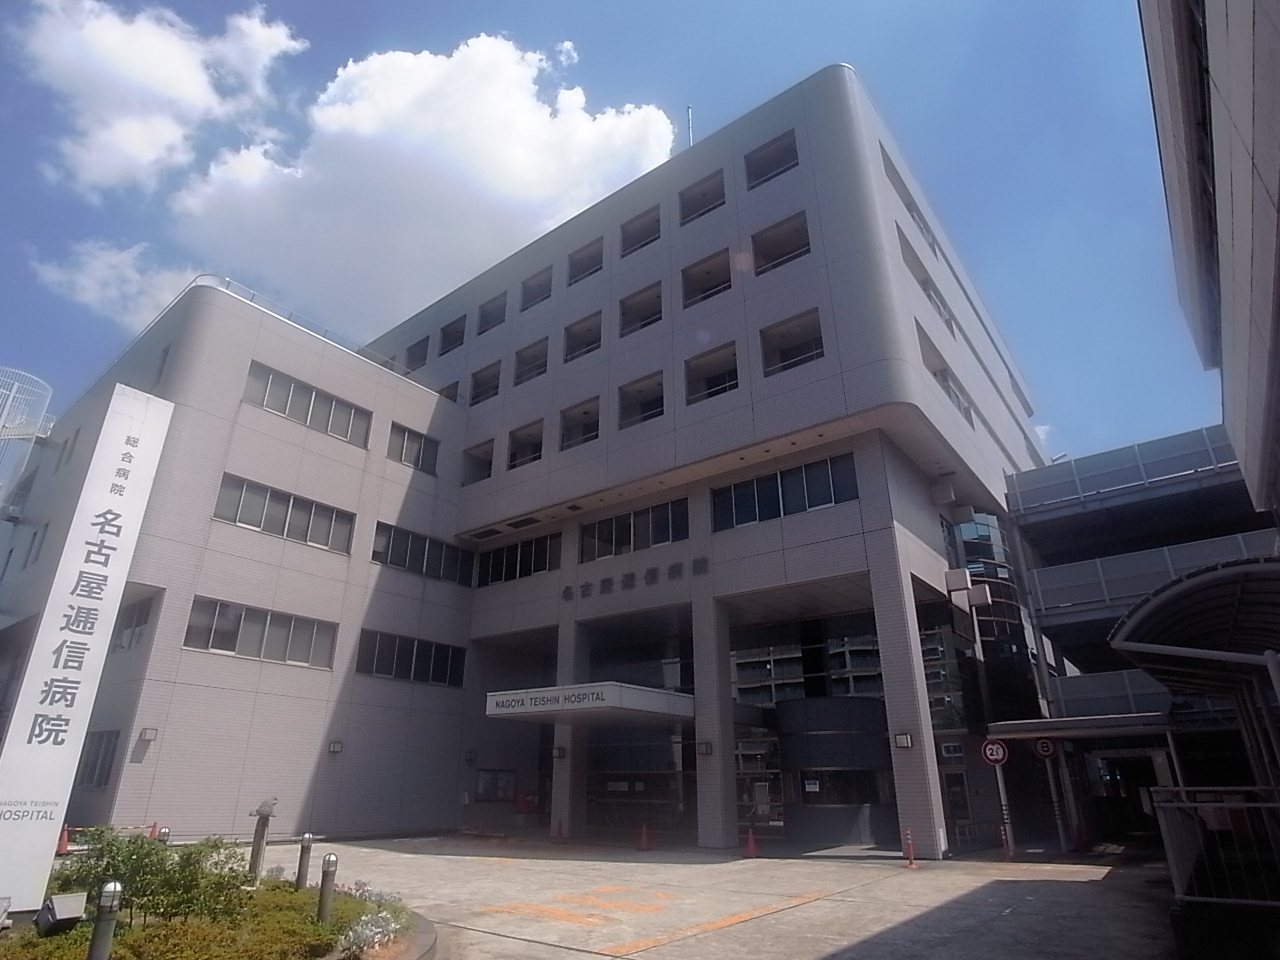 Hospital. 606m to Nagoya the Communications Hospital (General Hospital) (hospital)